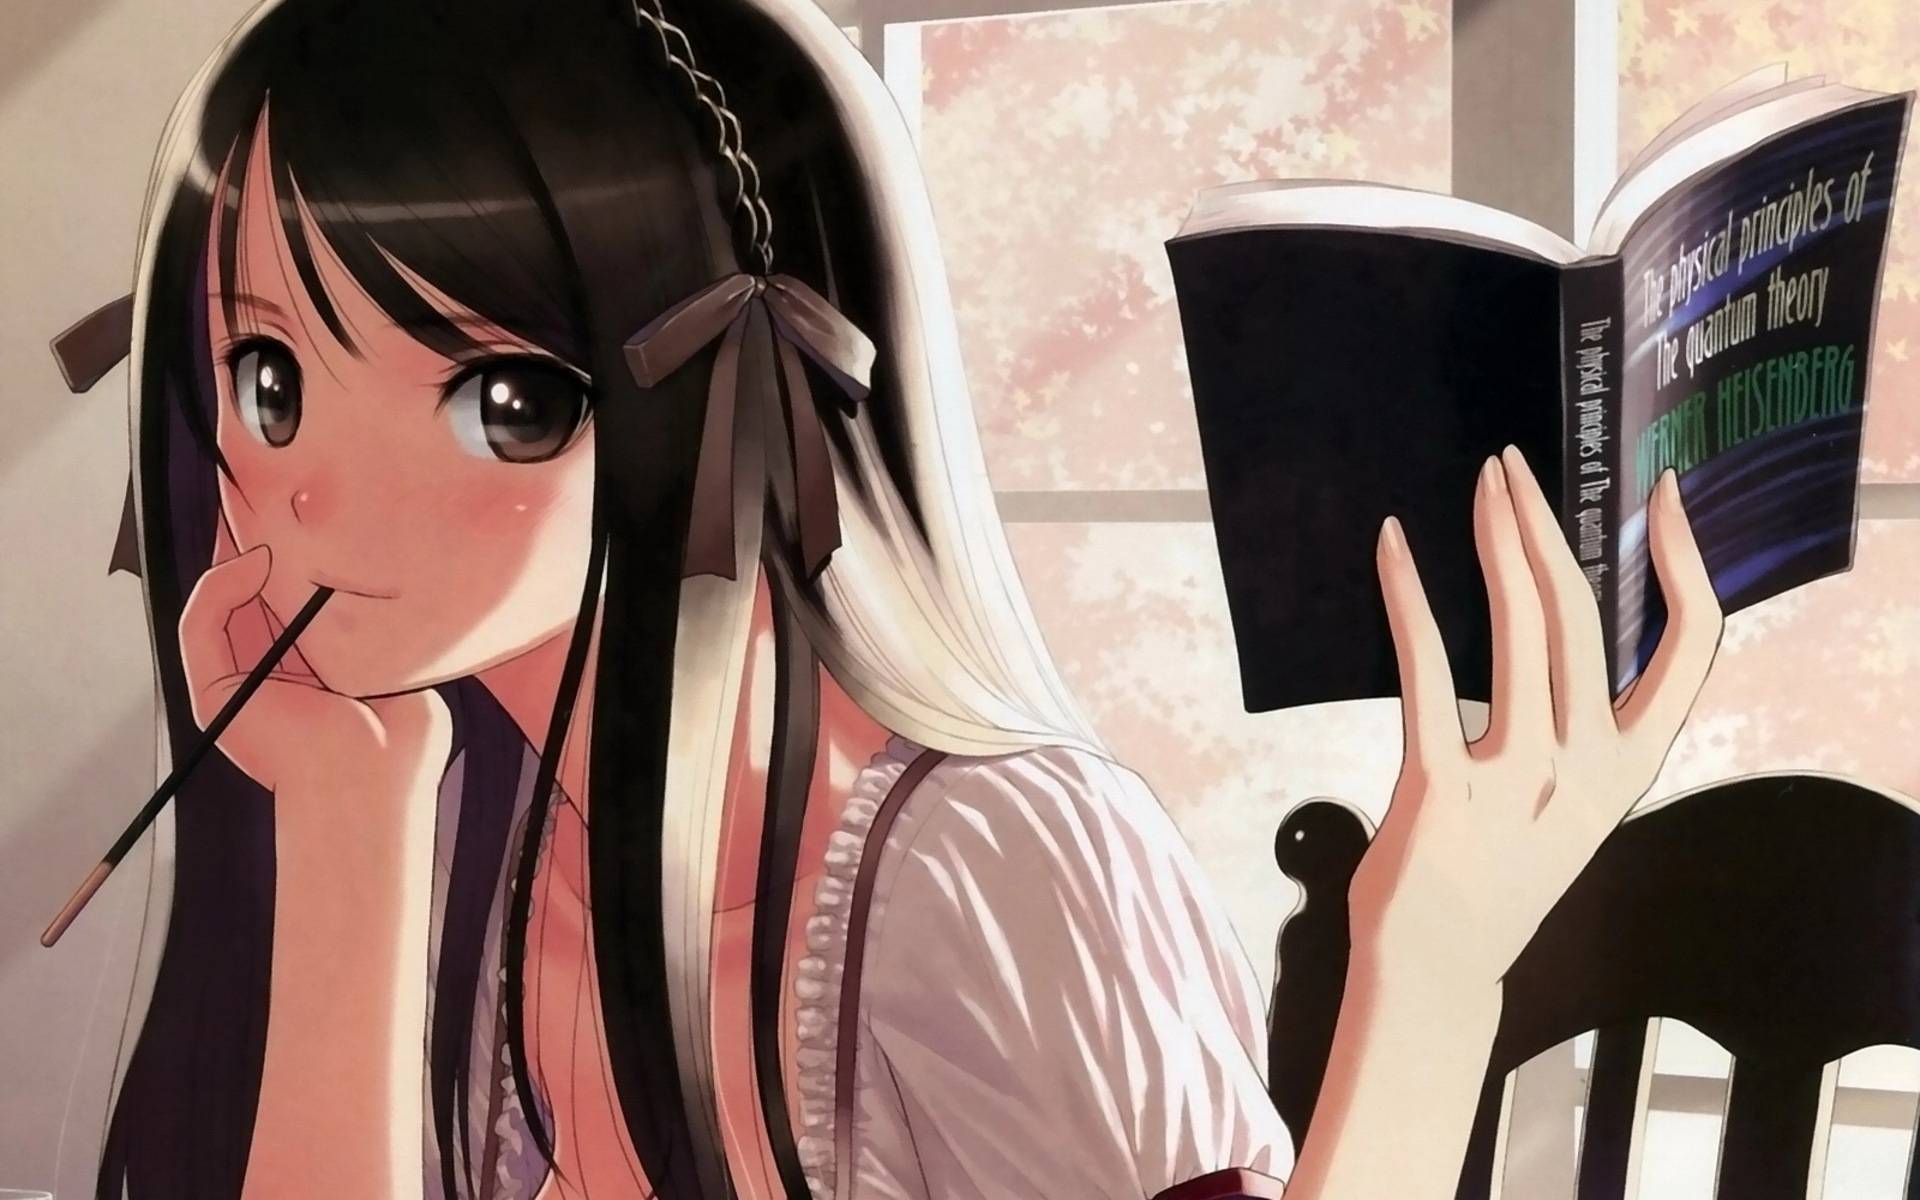 anime anime manga images pictures anime girl studying wallpaper tweet